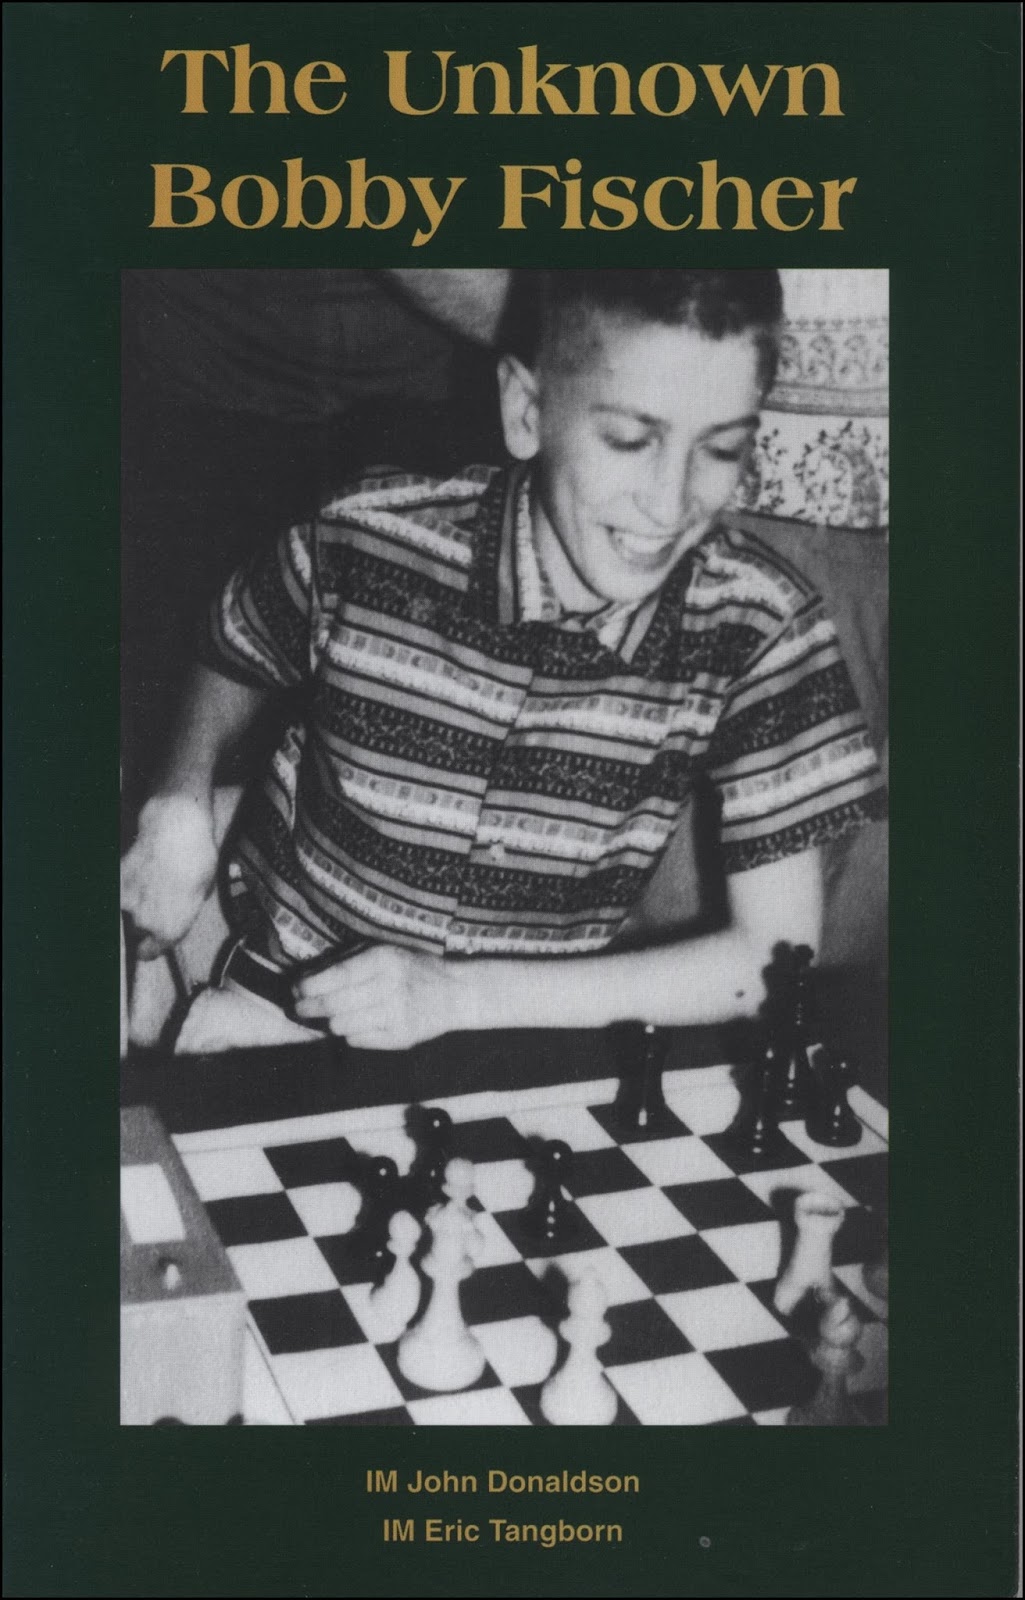 Bobby Fischer Teaches Chess